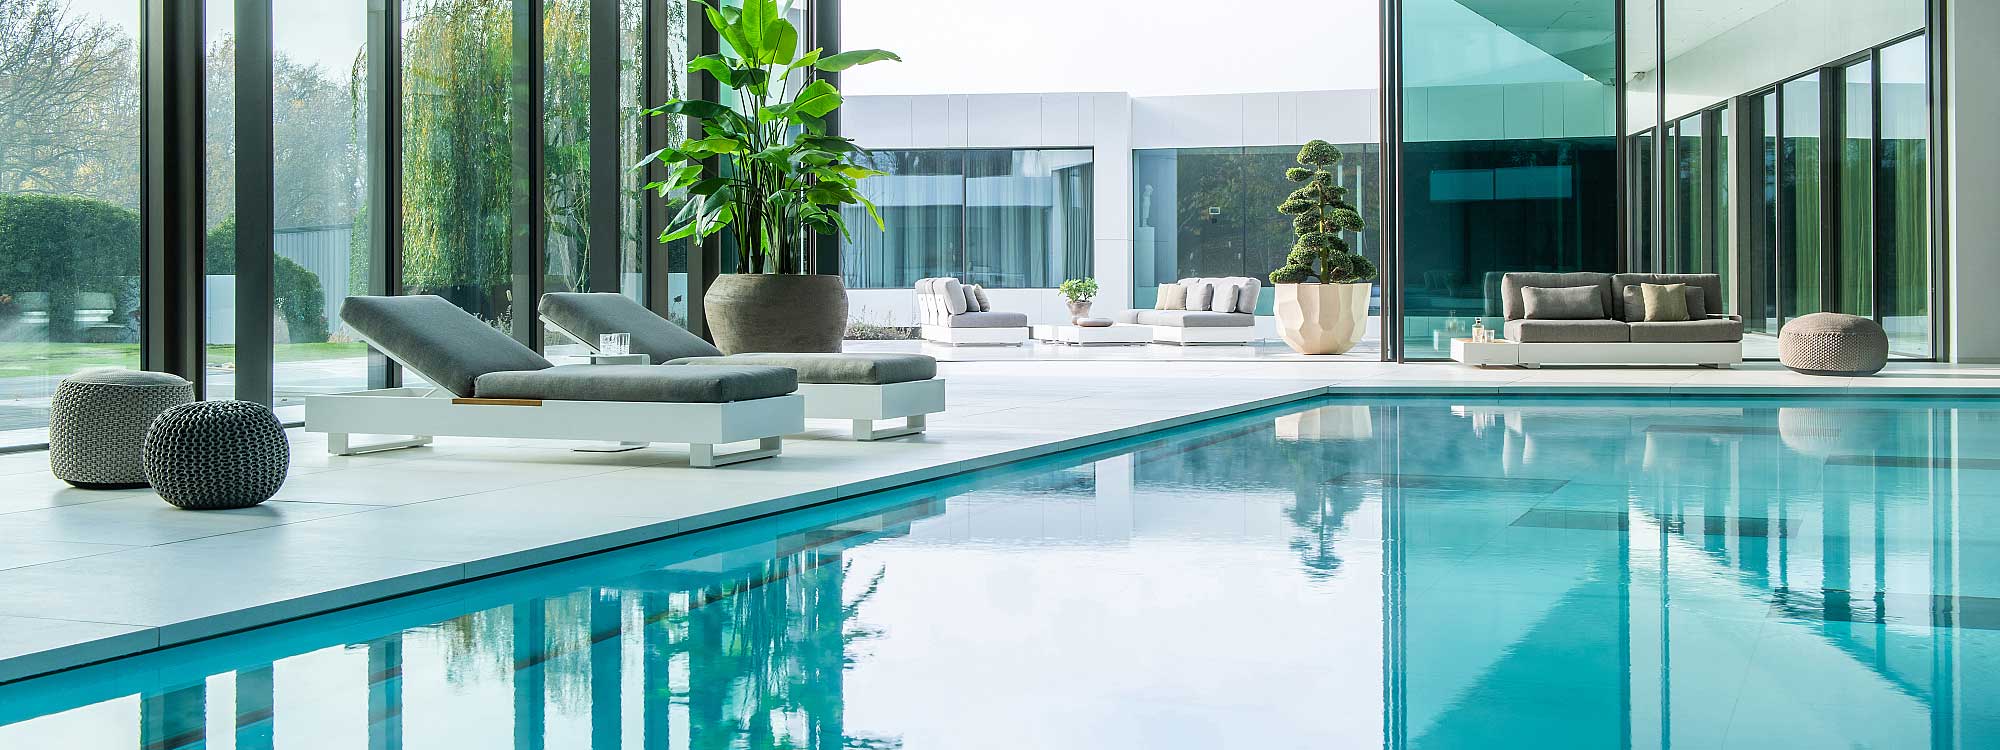 Image of Bari minimalist sun loungers and garden sofa in white around luxurious indoor swimming pool